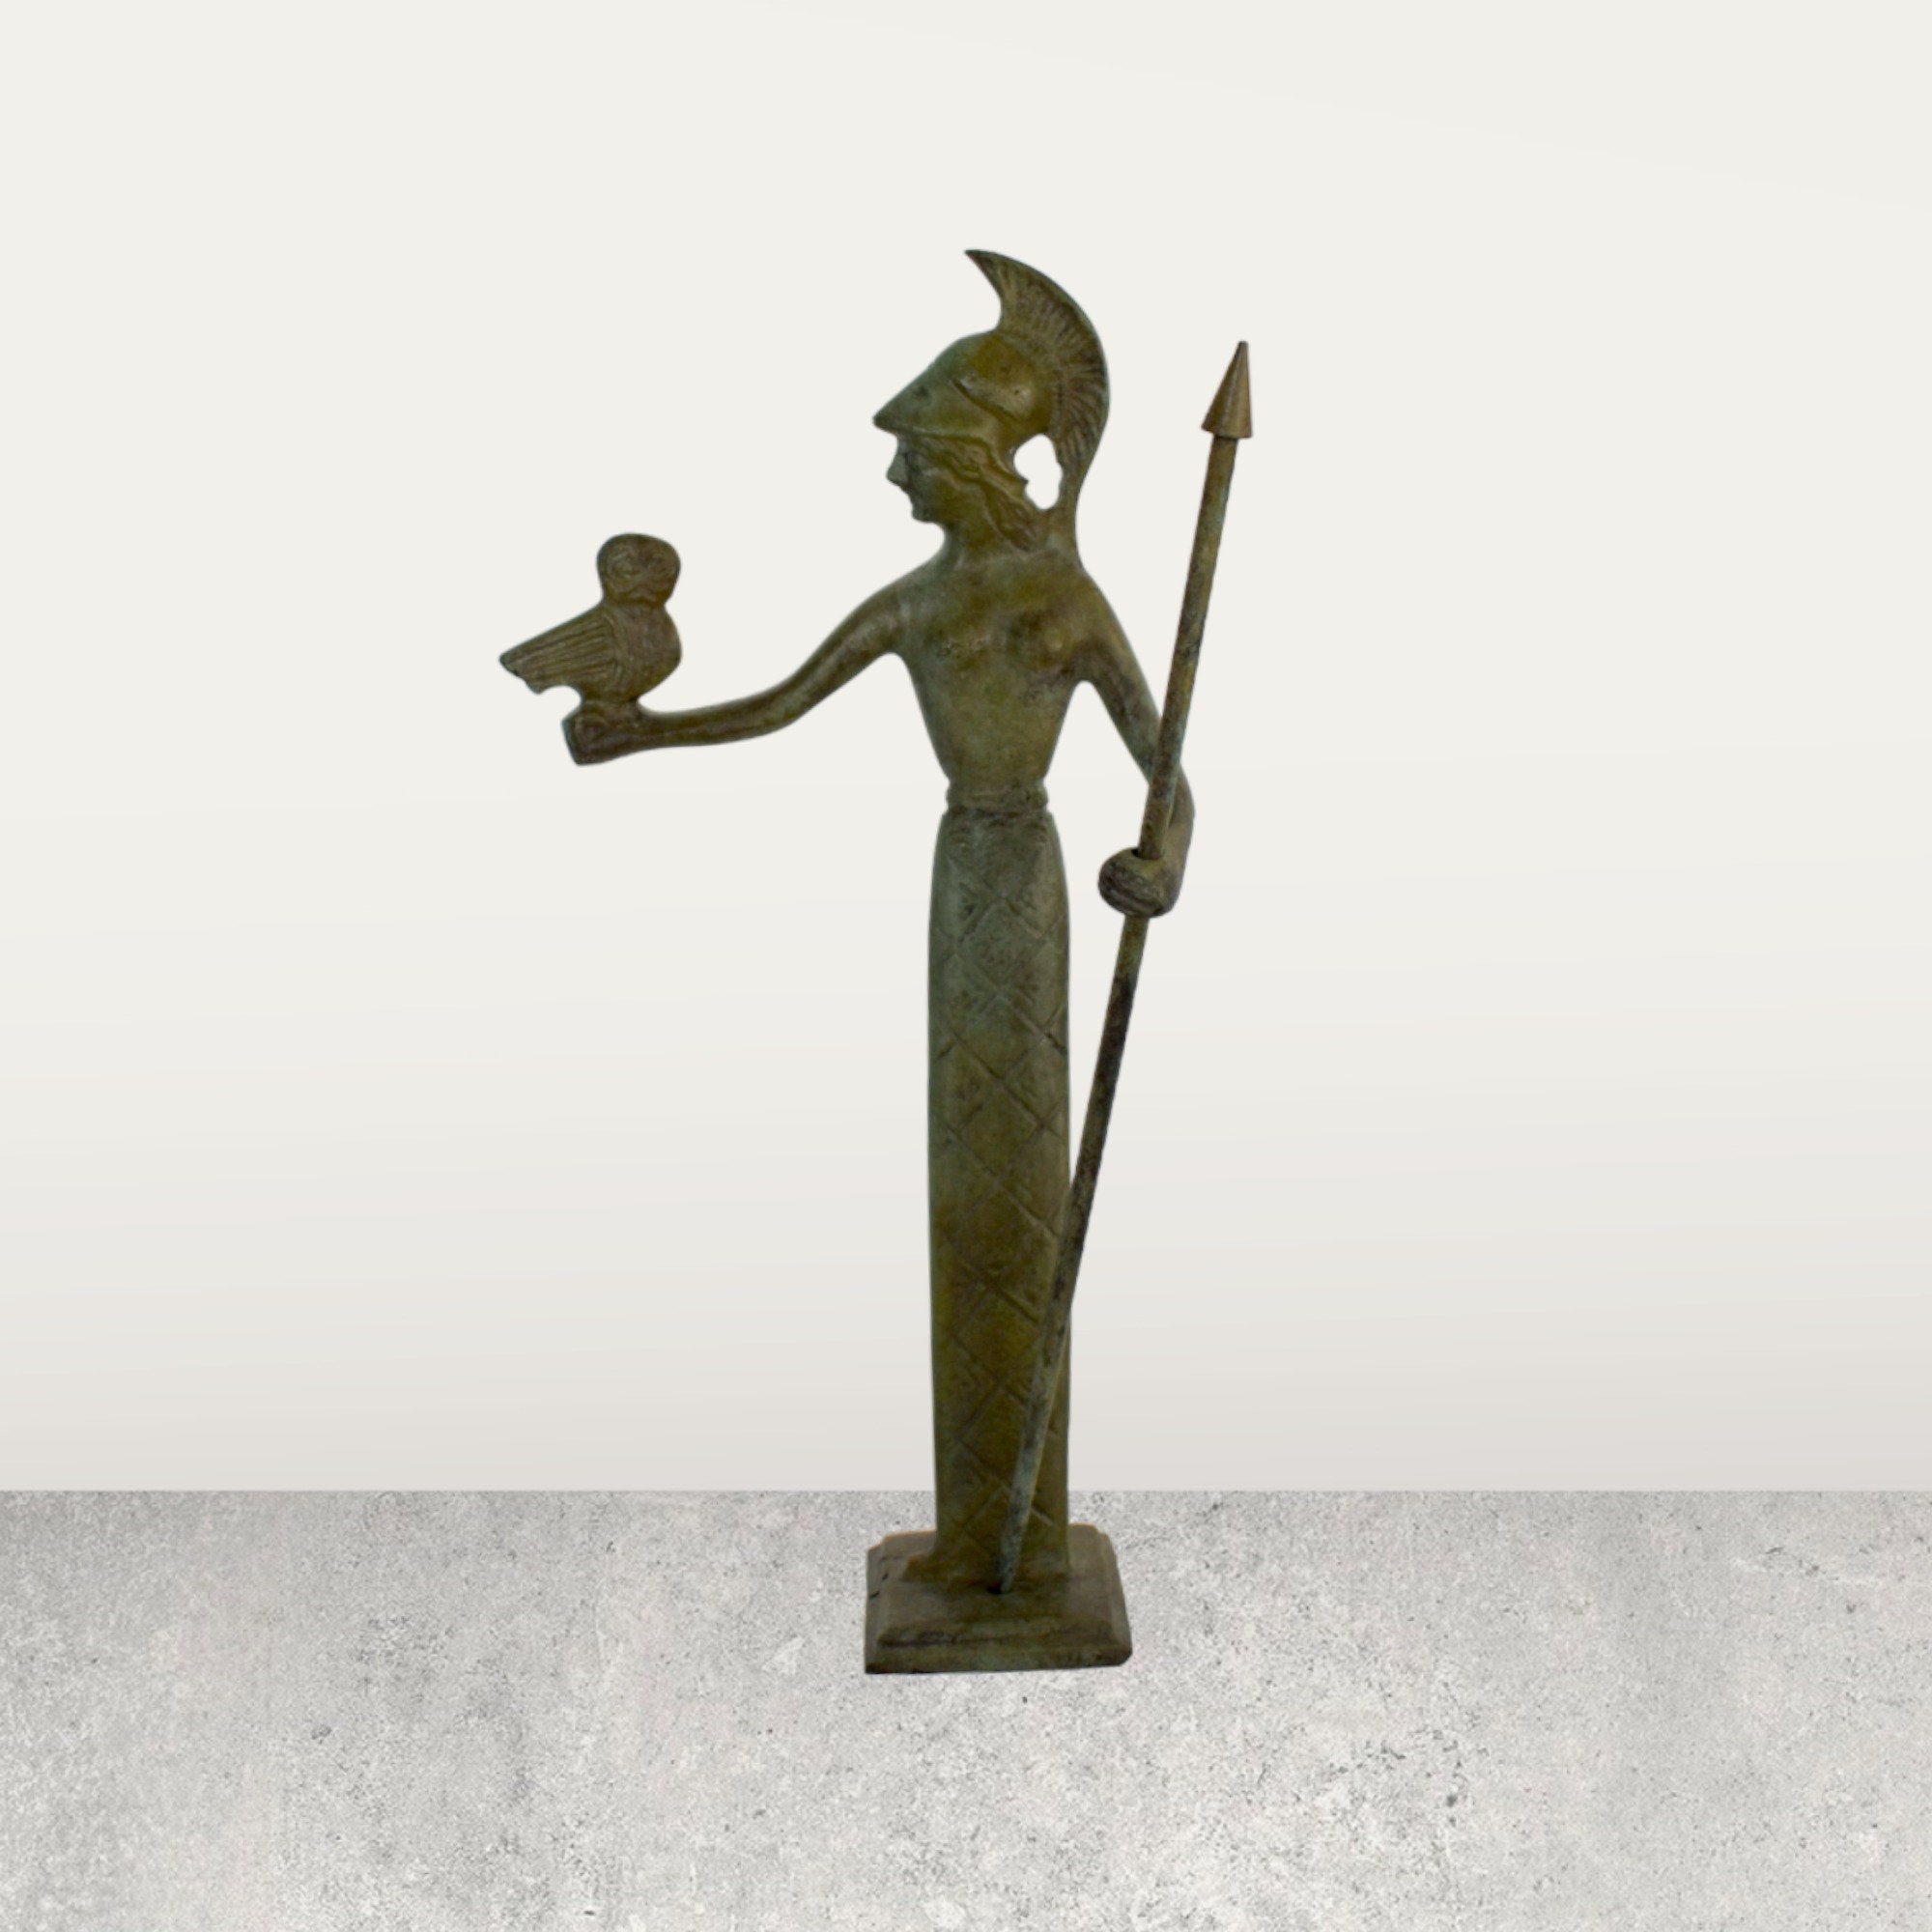 Athena (Minerva) & Owl Greek Roman Goddess of Wisdom Statue, Real Bronze  Powd